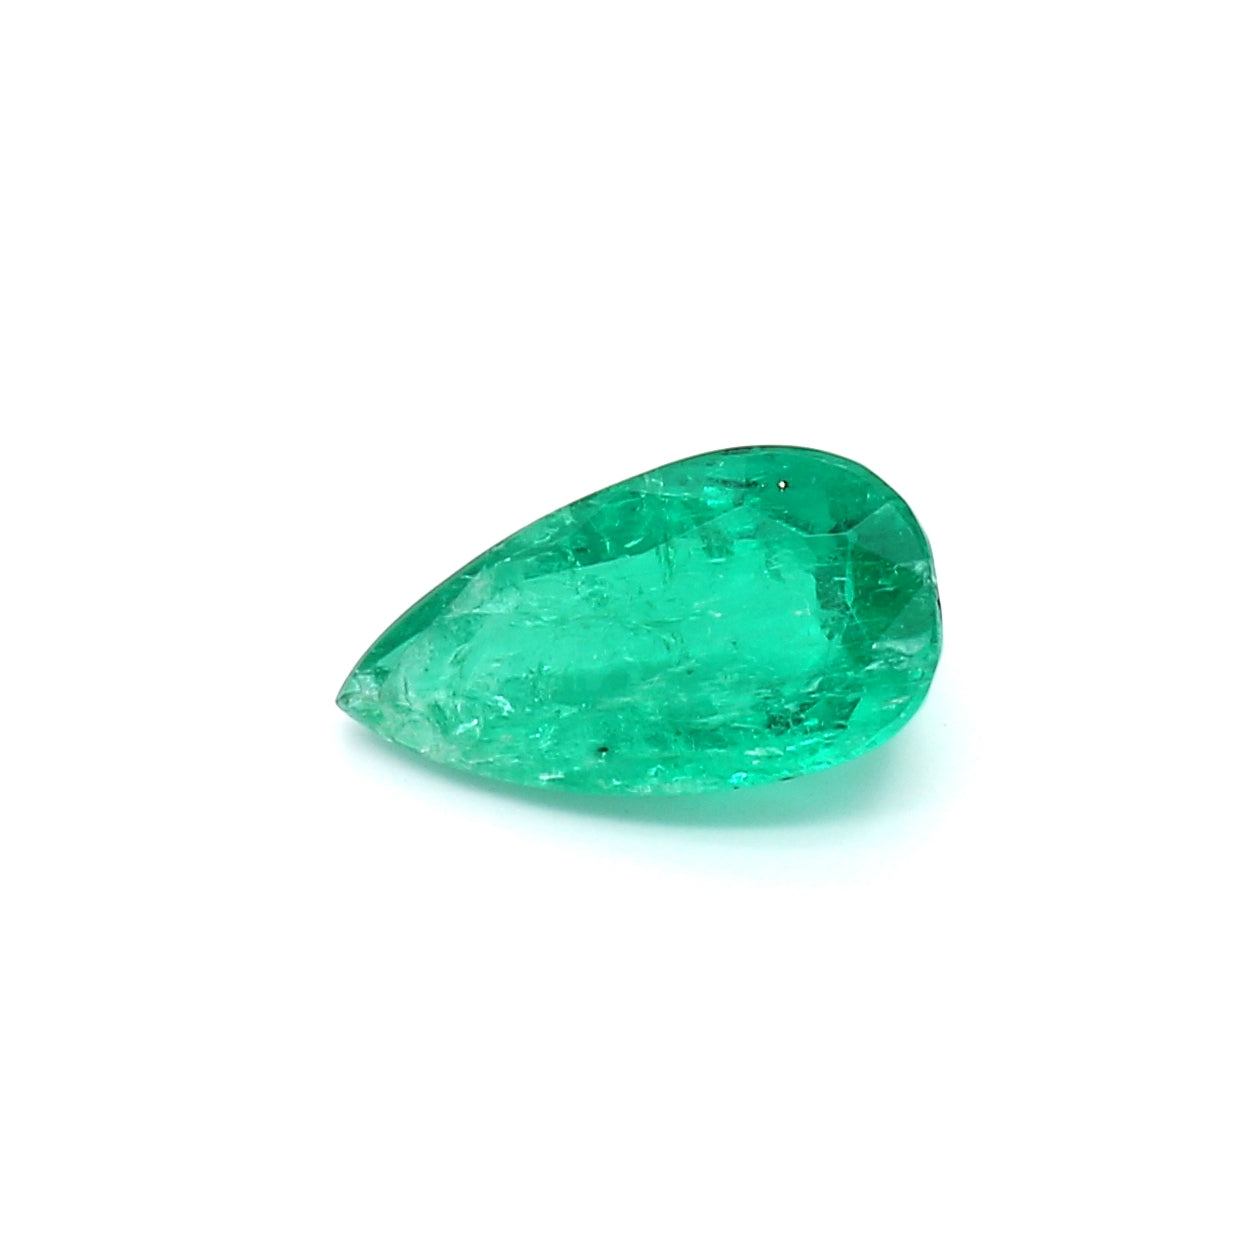 1.74ct Pear Shape Emerald, Minor Oil, Colombia - 11.08 x 5.83 x 4.97mm